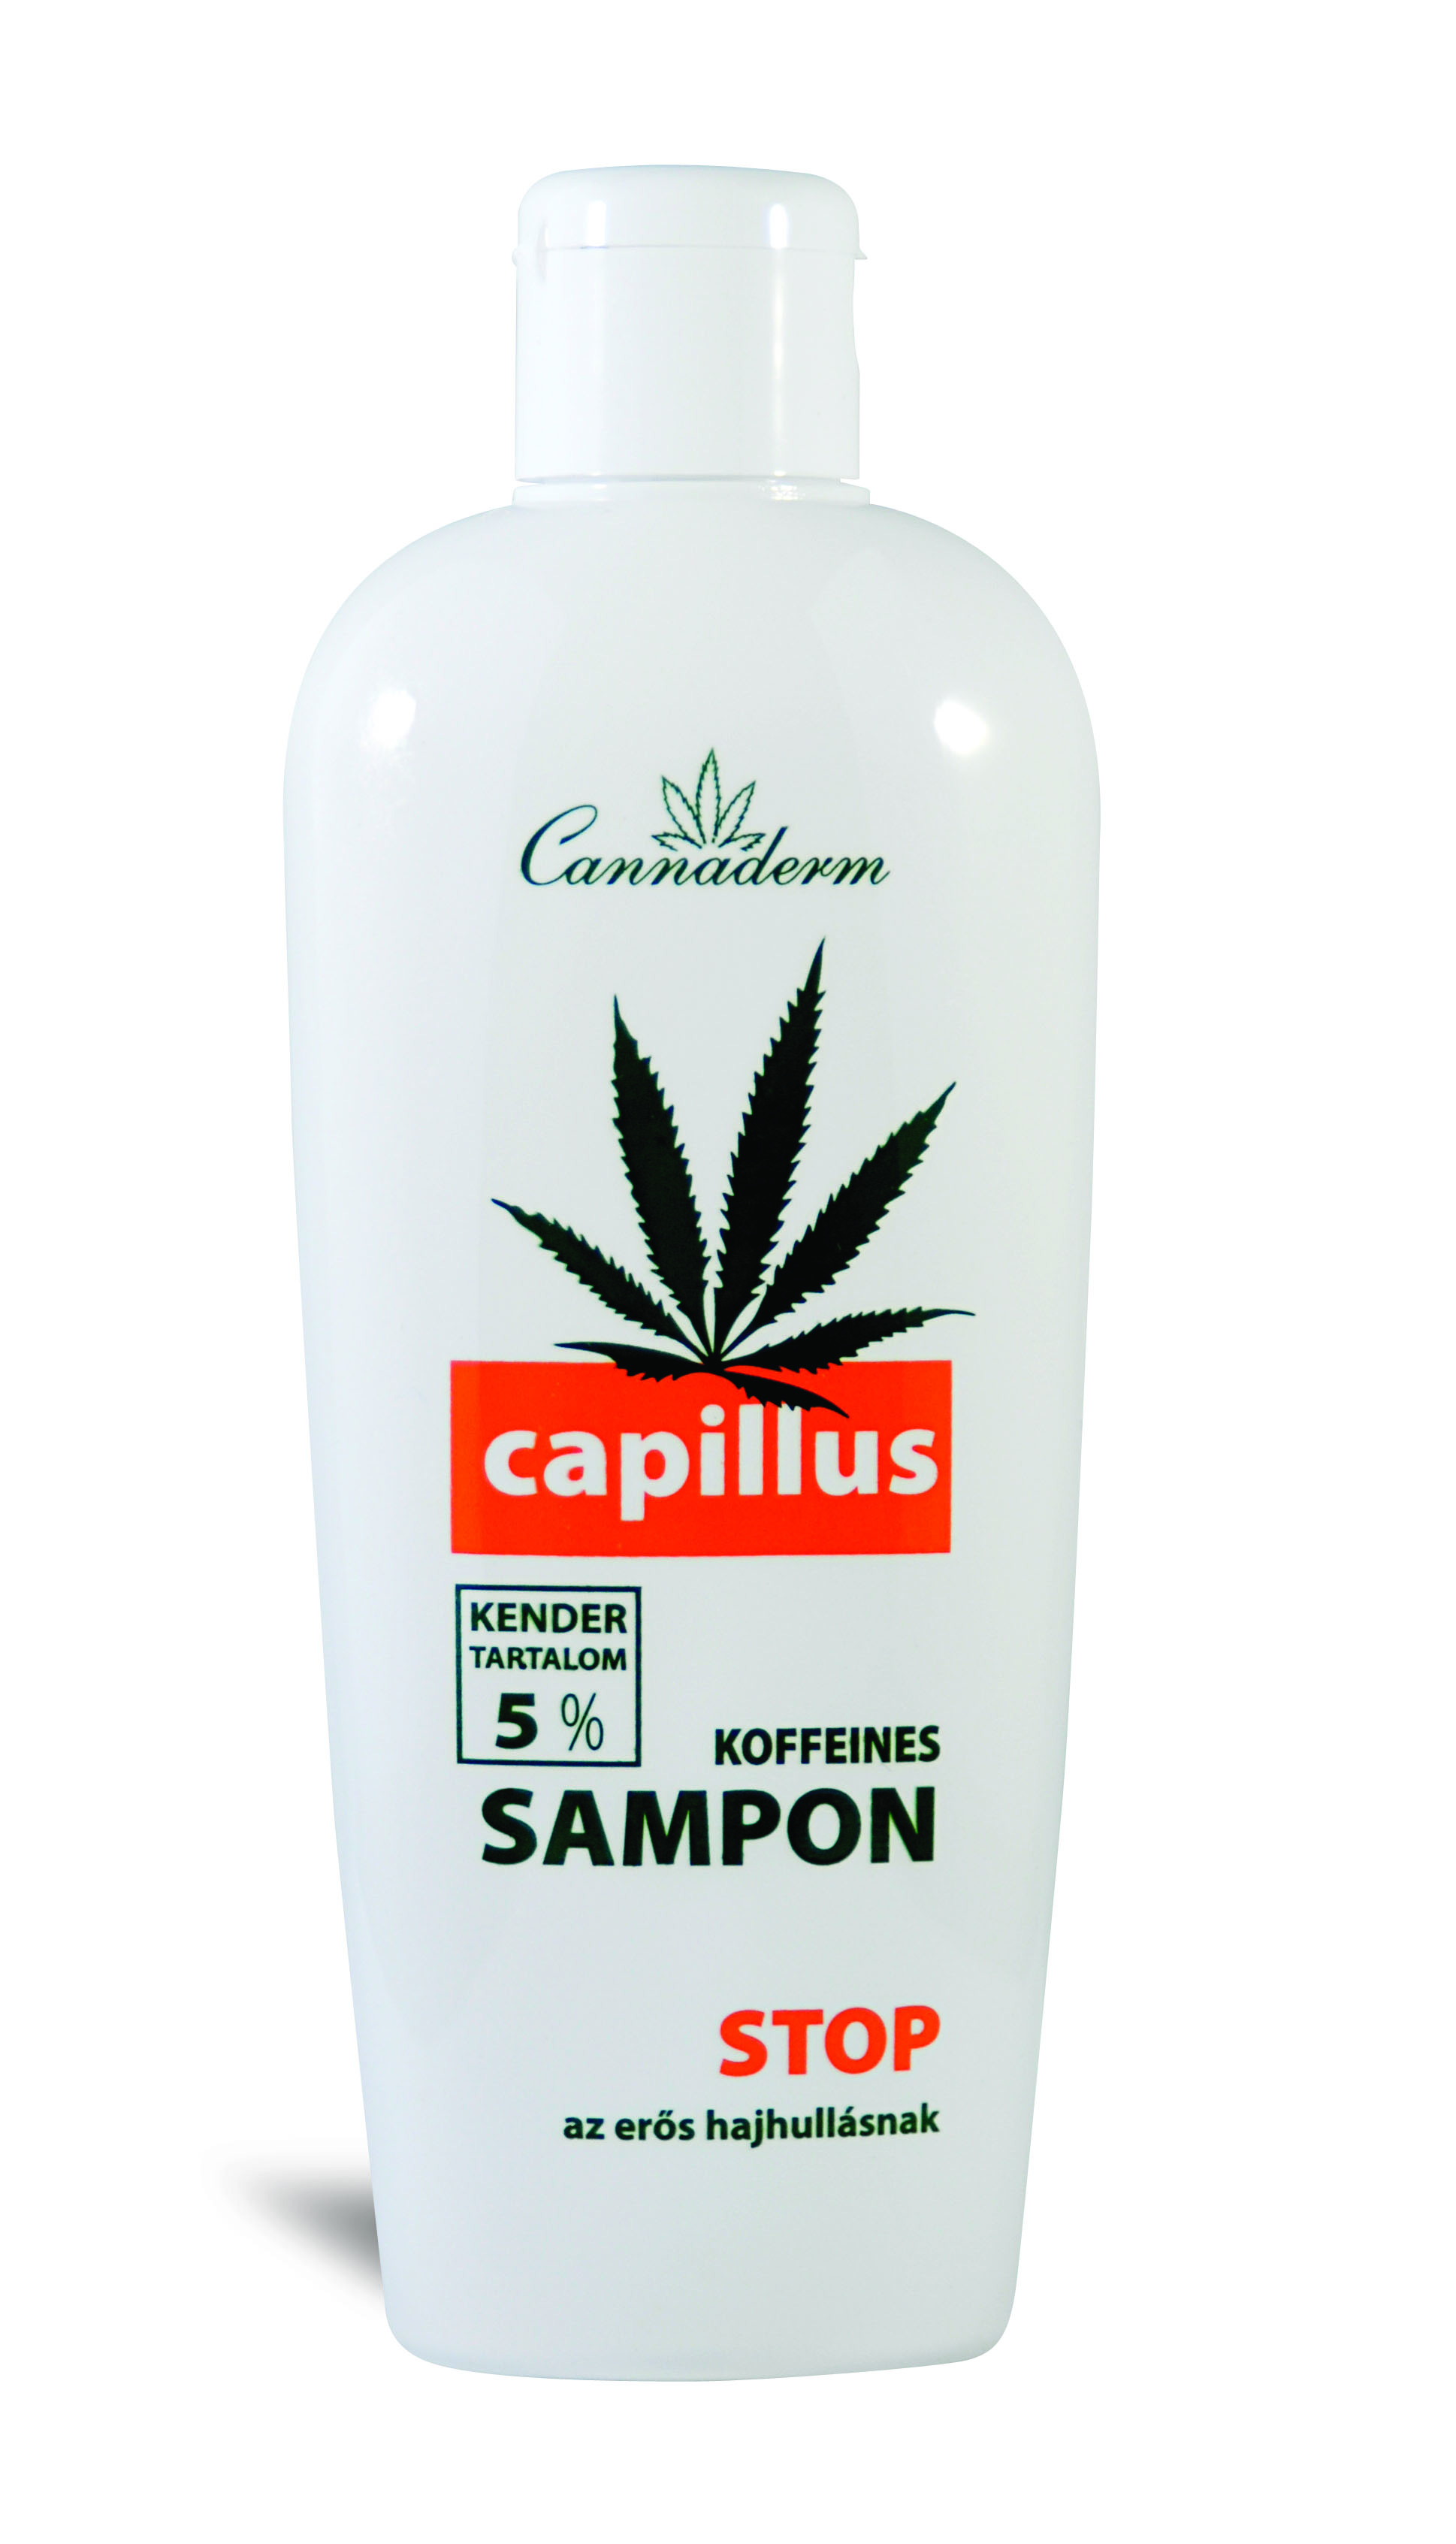 Cannaderm Capillus sampon hajhullás ellen 